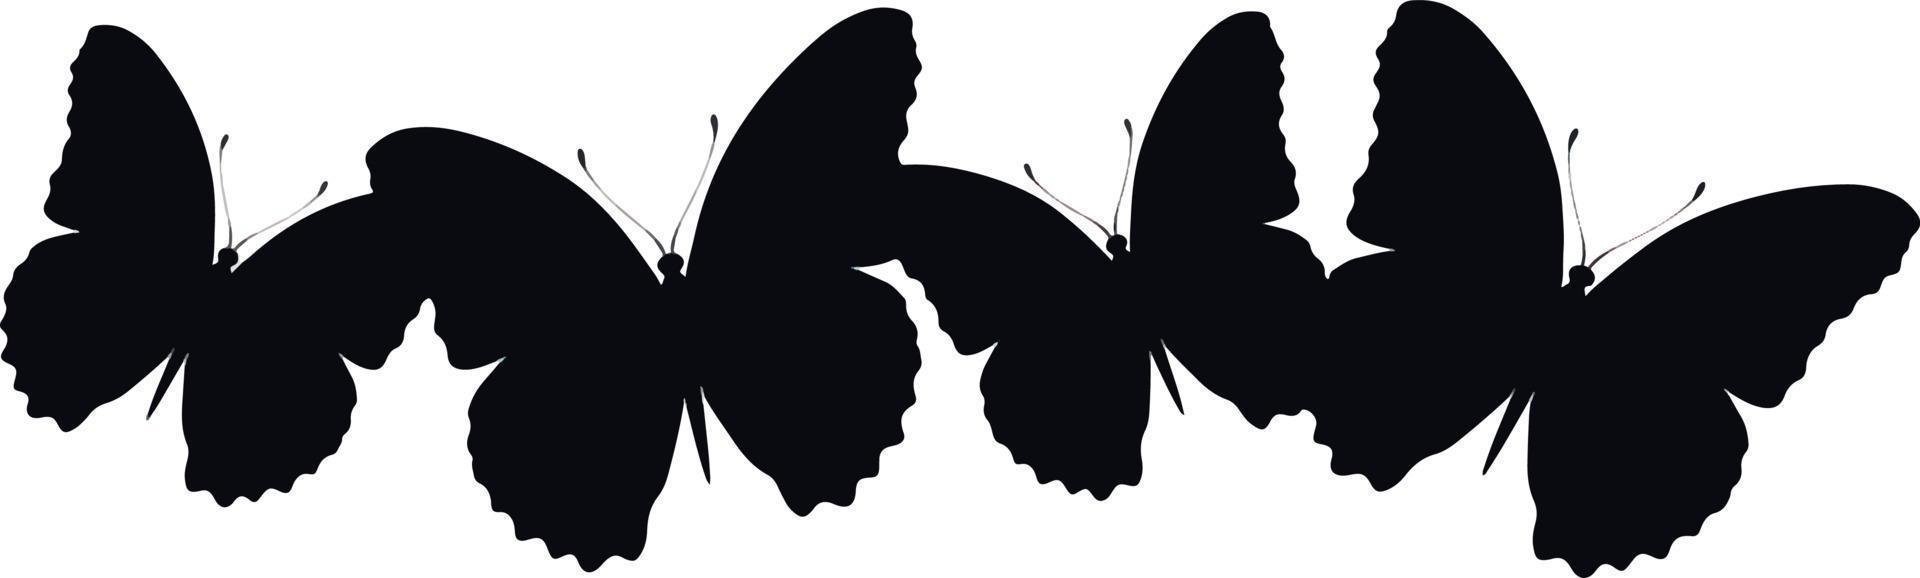 vlinder zwarte silhouetten. clip art. ontwerp, ornamenten. vector